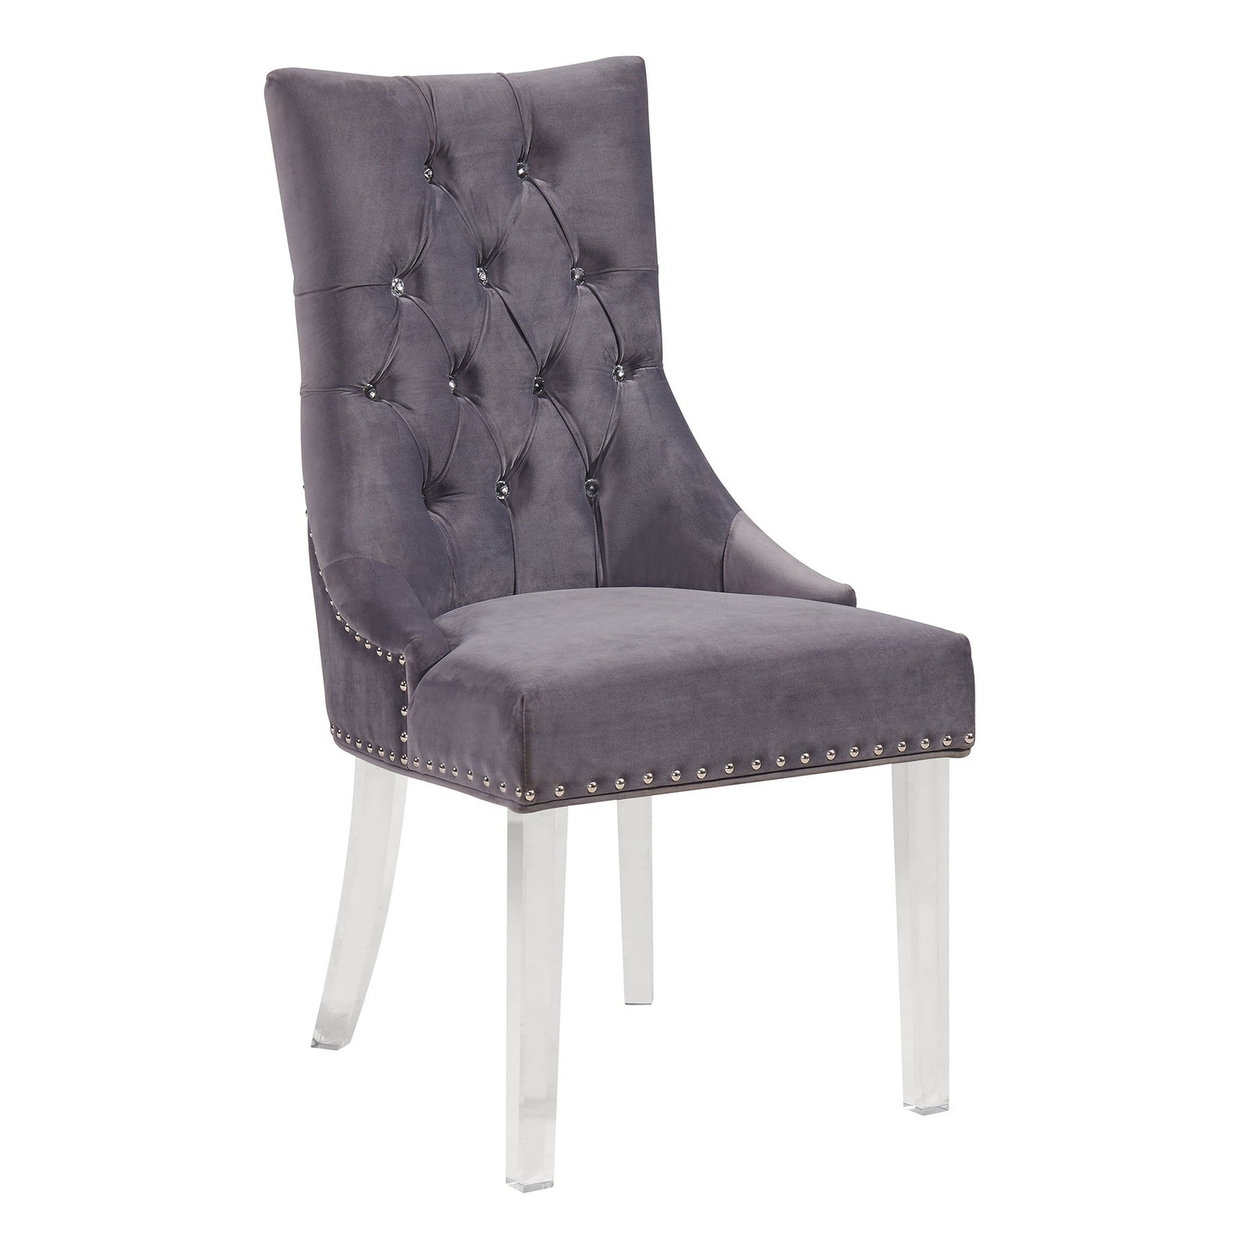 Velvet Upholstered Button Tufted Dining Chair With Acrylic Legs, Gray- Saltoro Sherpi